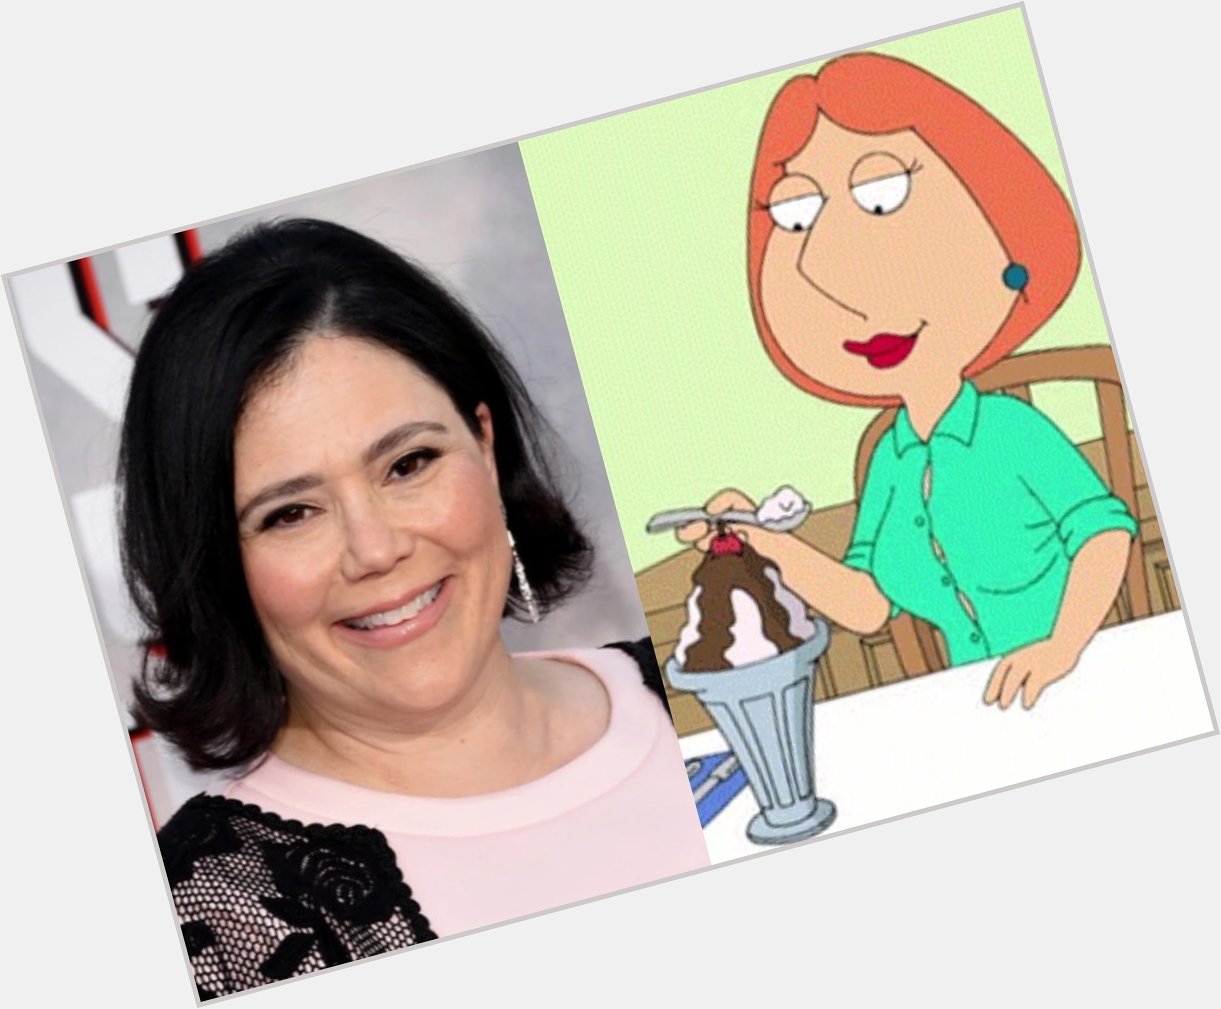 Happy 50th Birthday to Alex Borstein! The voice of Lois Griffin on Family Guy. 